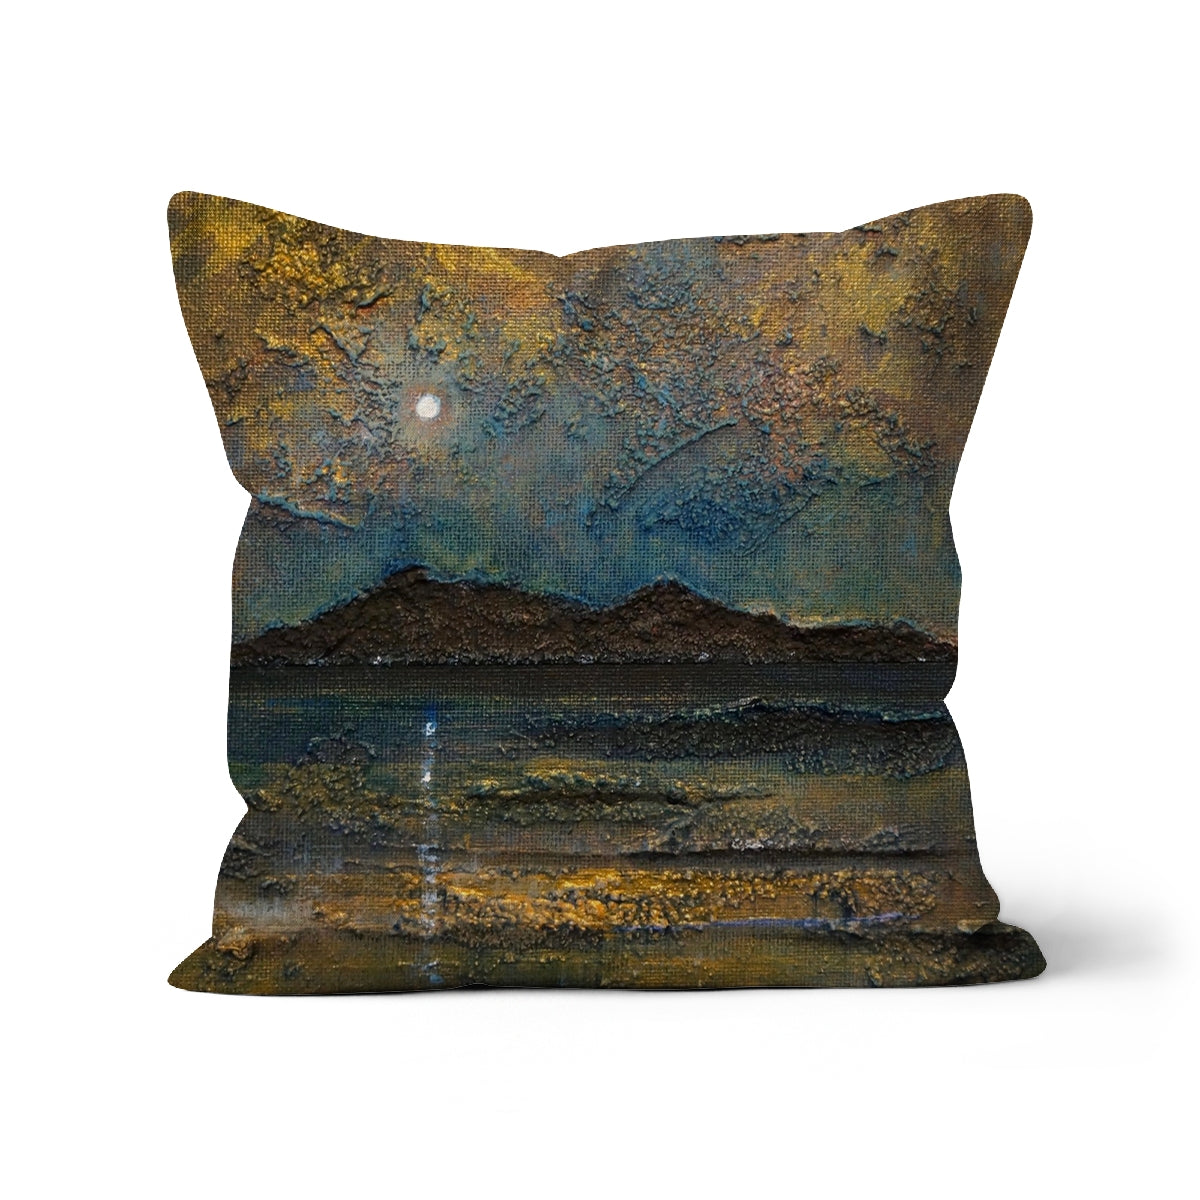 Arran Moonlight Art Gifts Cushion-Cushions-Arran Art Gallery-Canvas-24"x24"-Paintings, Prints, Homeware, Art Gifts From Scotland By Scottish Artist Kevin Hunter